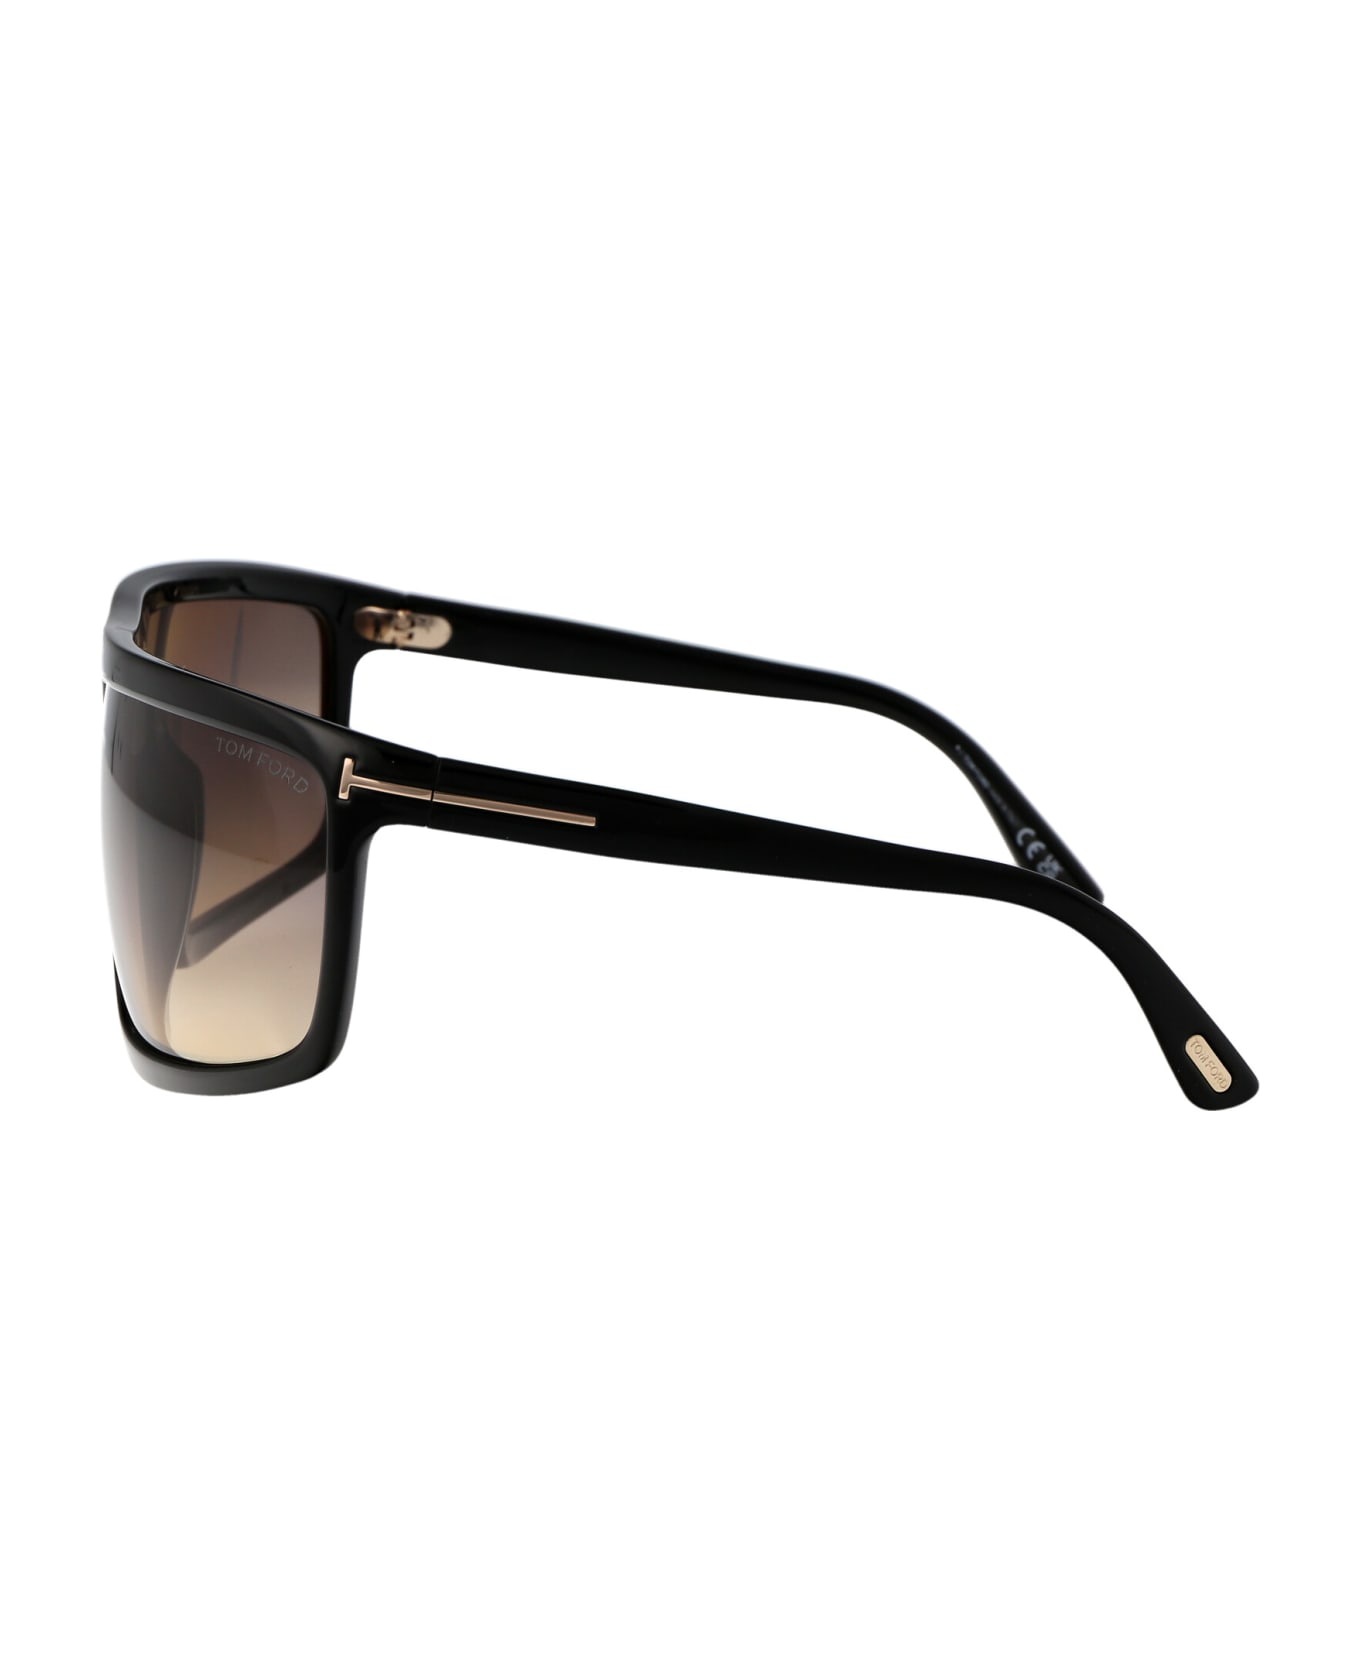 Tom Ford Eyewear Clint-02 Sunglasses - 01B Nero Lucido / Fumo Grad サングラス